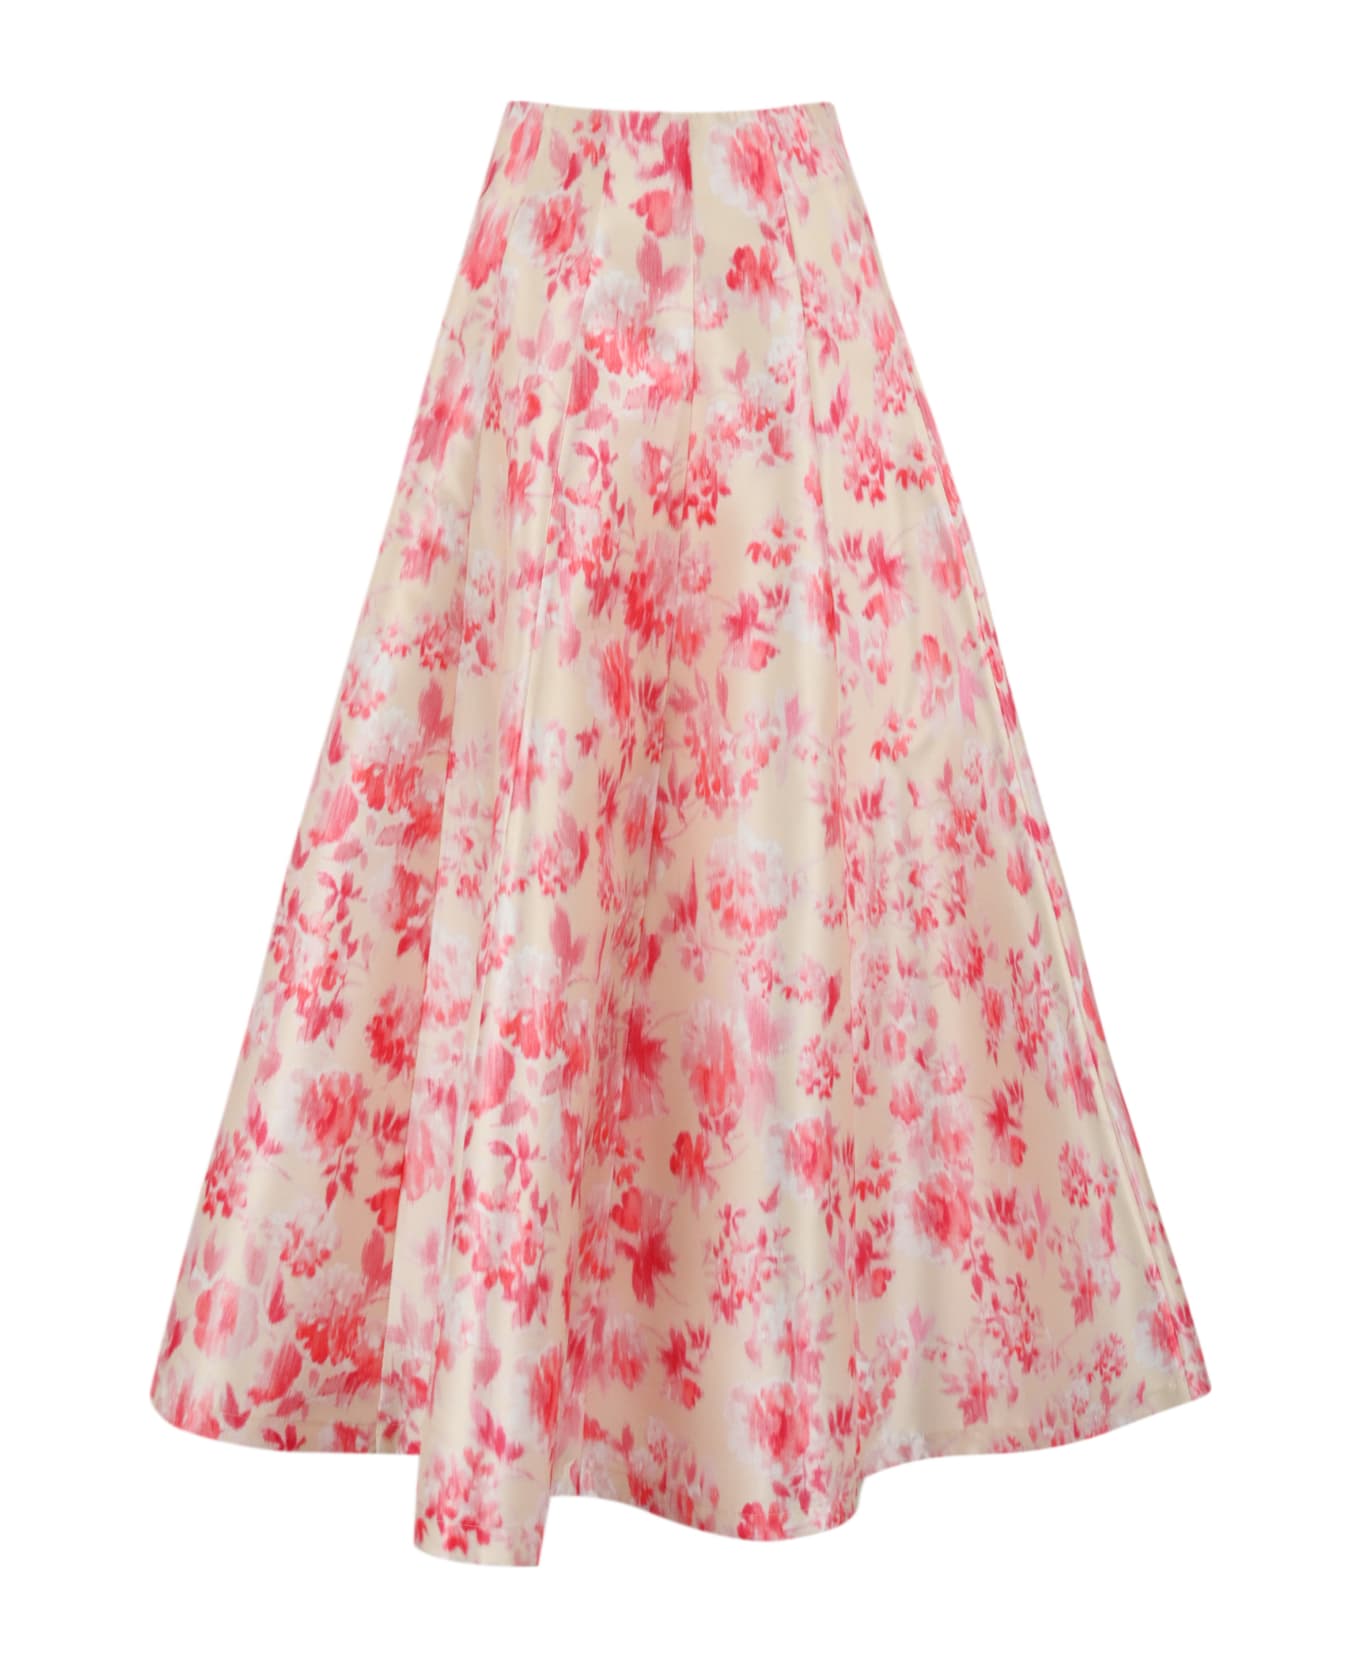 Philosophy di Lorenzo Serafini Radzmir Skirt With Floral Print - Bianco/rosso